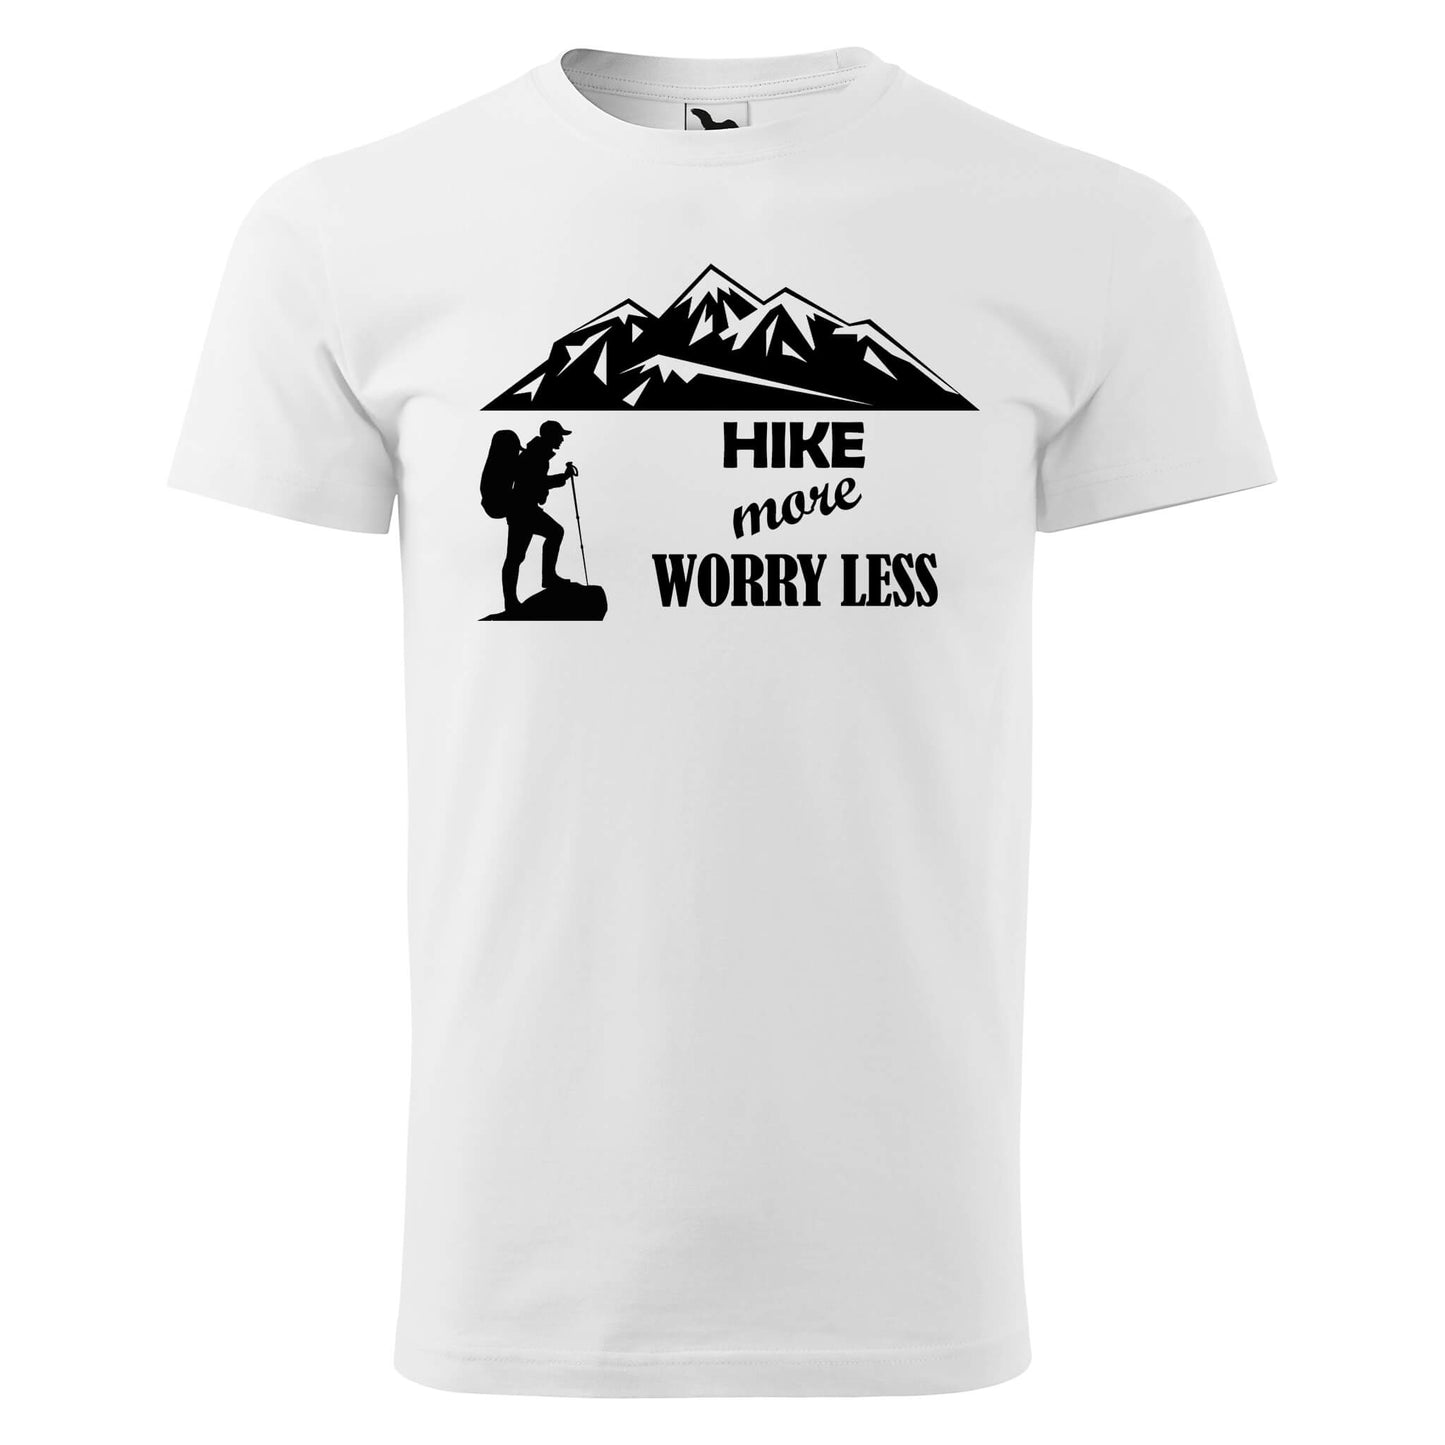 T-shirt - Hike more worry less - rvdesignprint